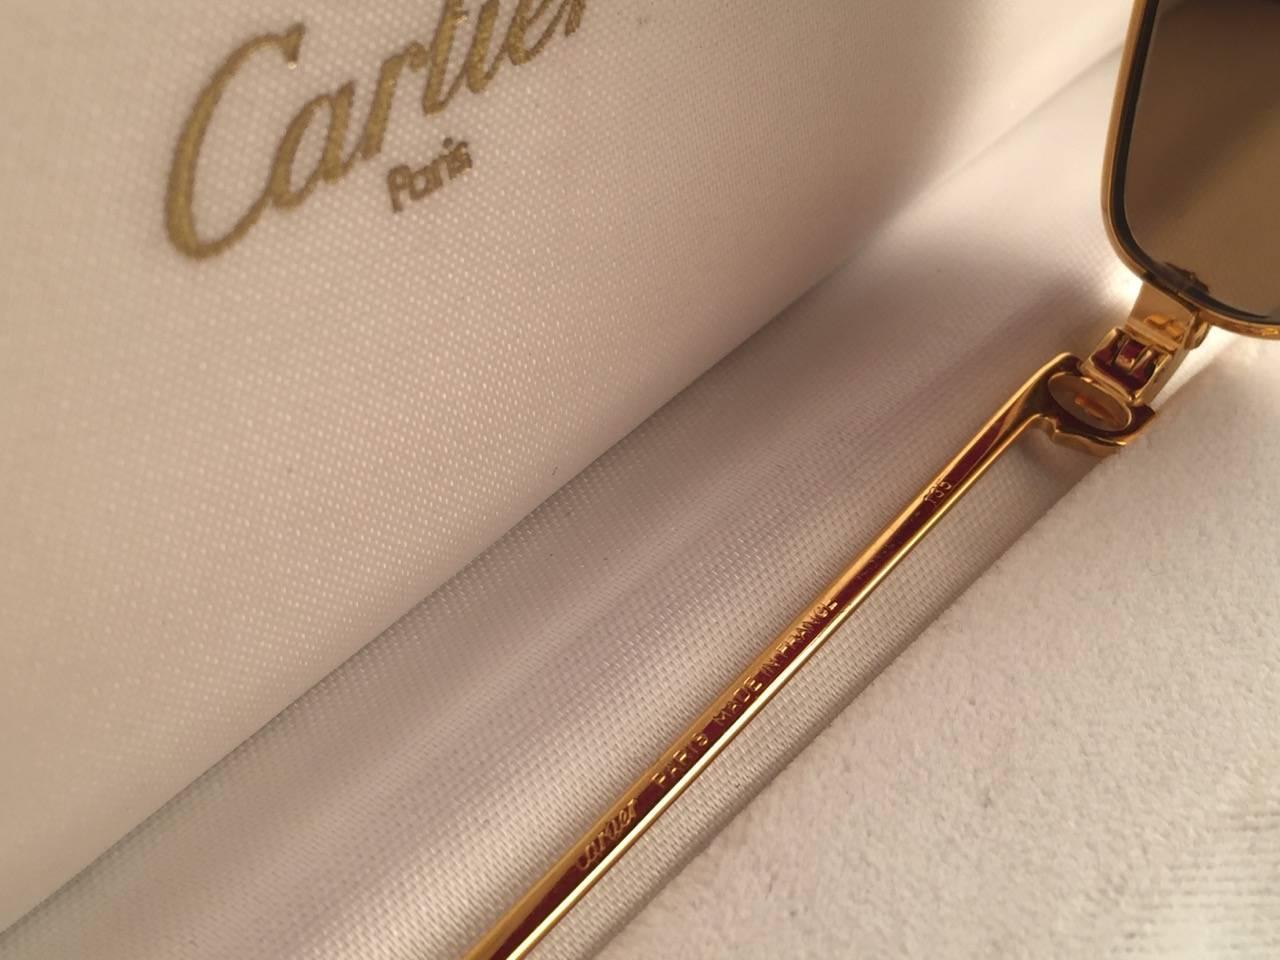 Women's Cartier Rivoli Vendome 56mm Cat Eye Heavy Gold Plated Sunglasses France